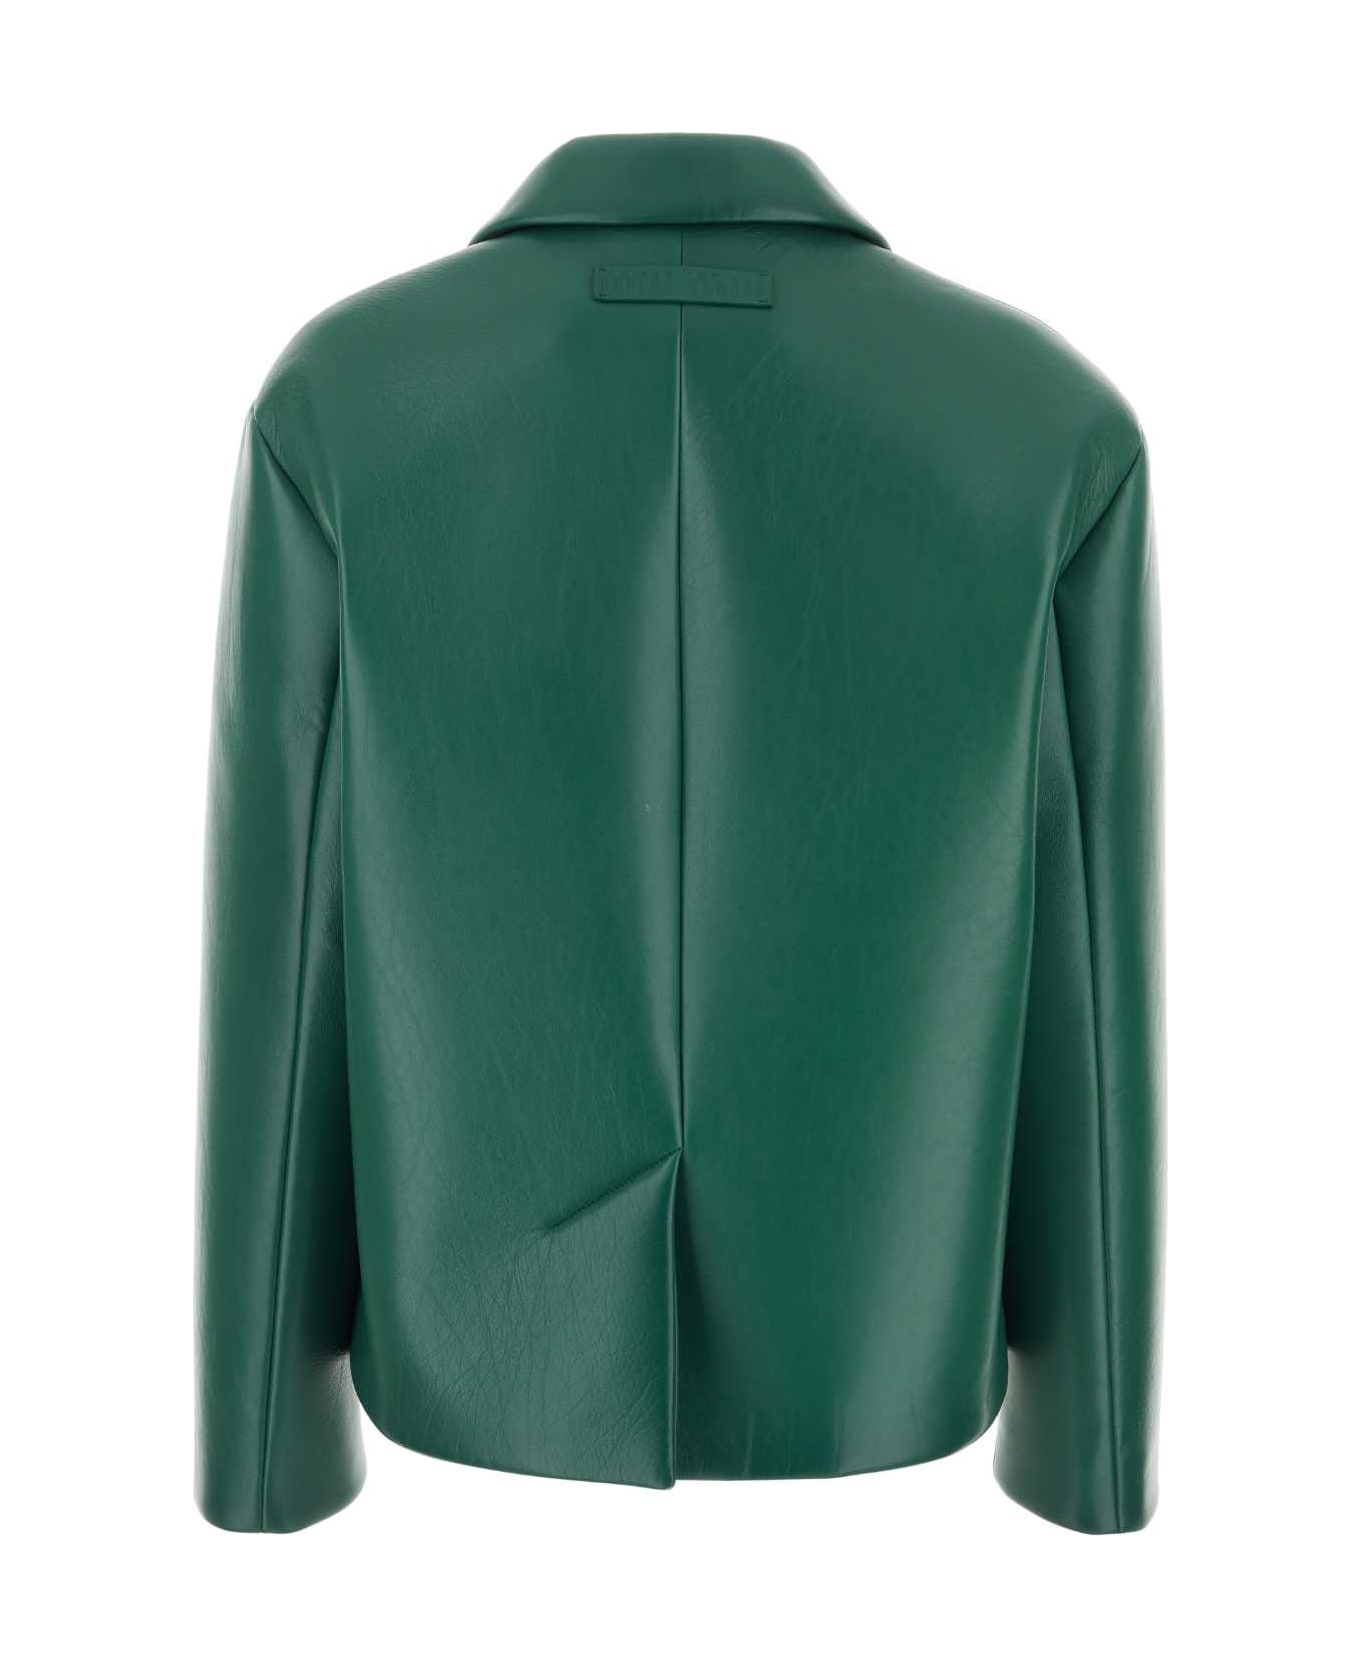 Miu Miu Emerald Green Nappa Leather Jacket - ASSENZIO ブレザー